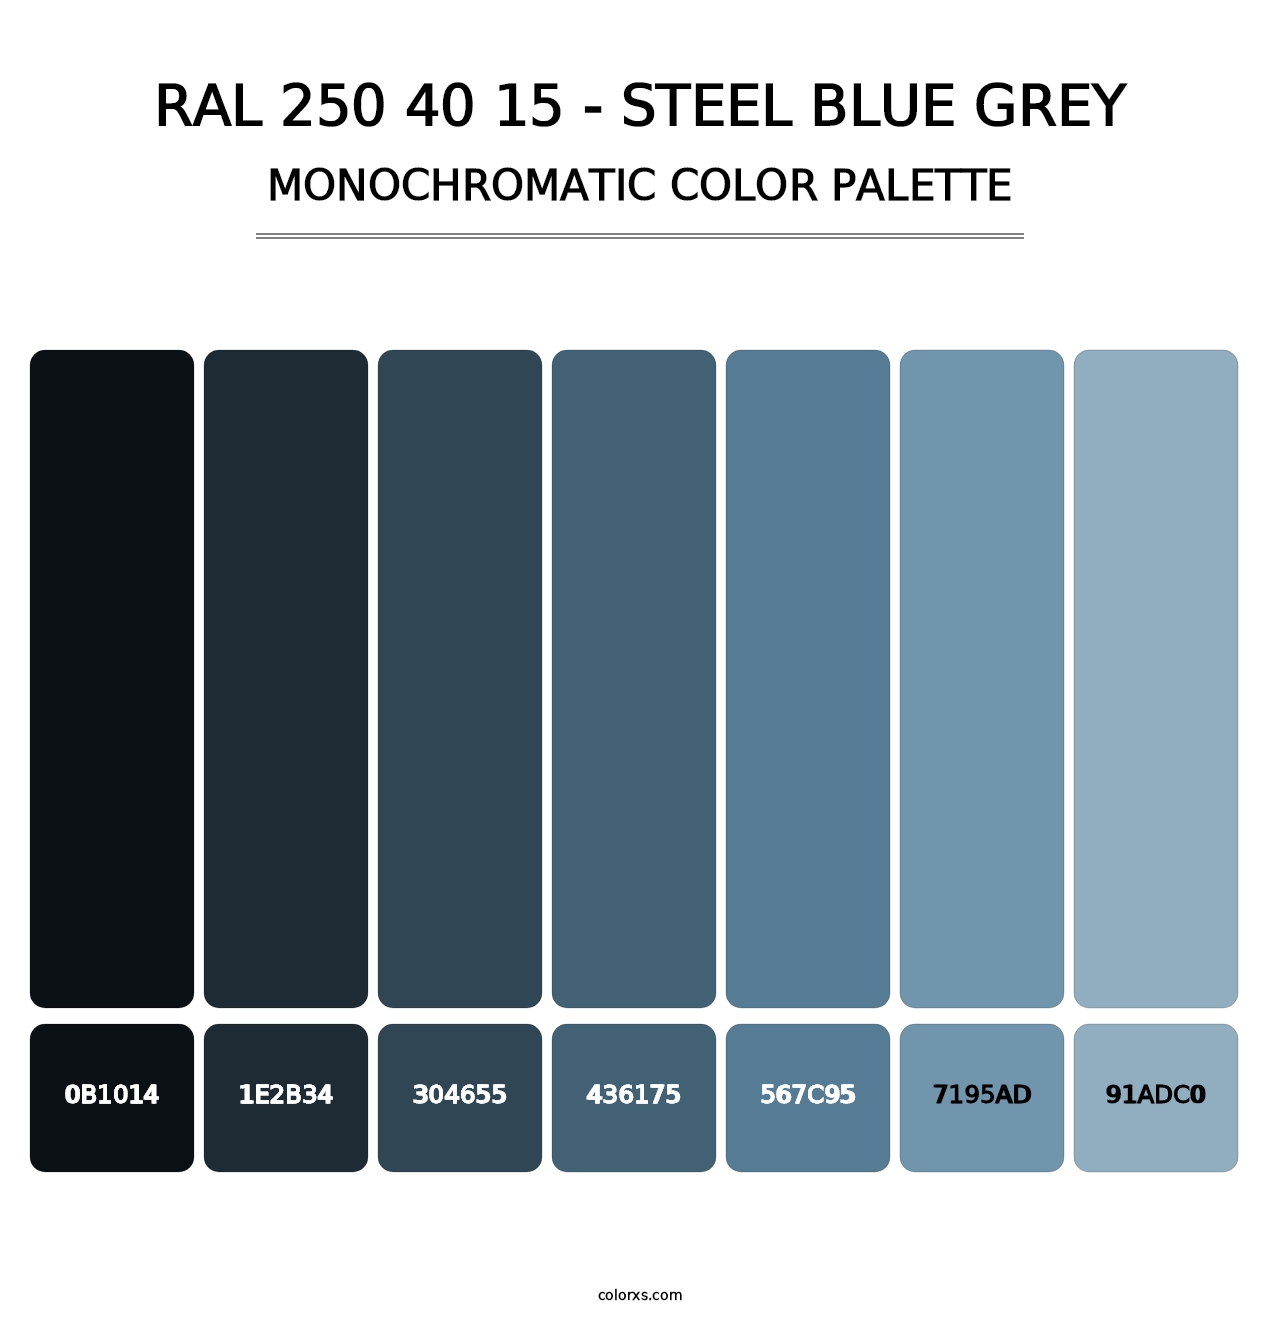 RAL 250 40 15 - Steel Blue Grey - Monochromatic Color Palette